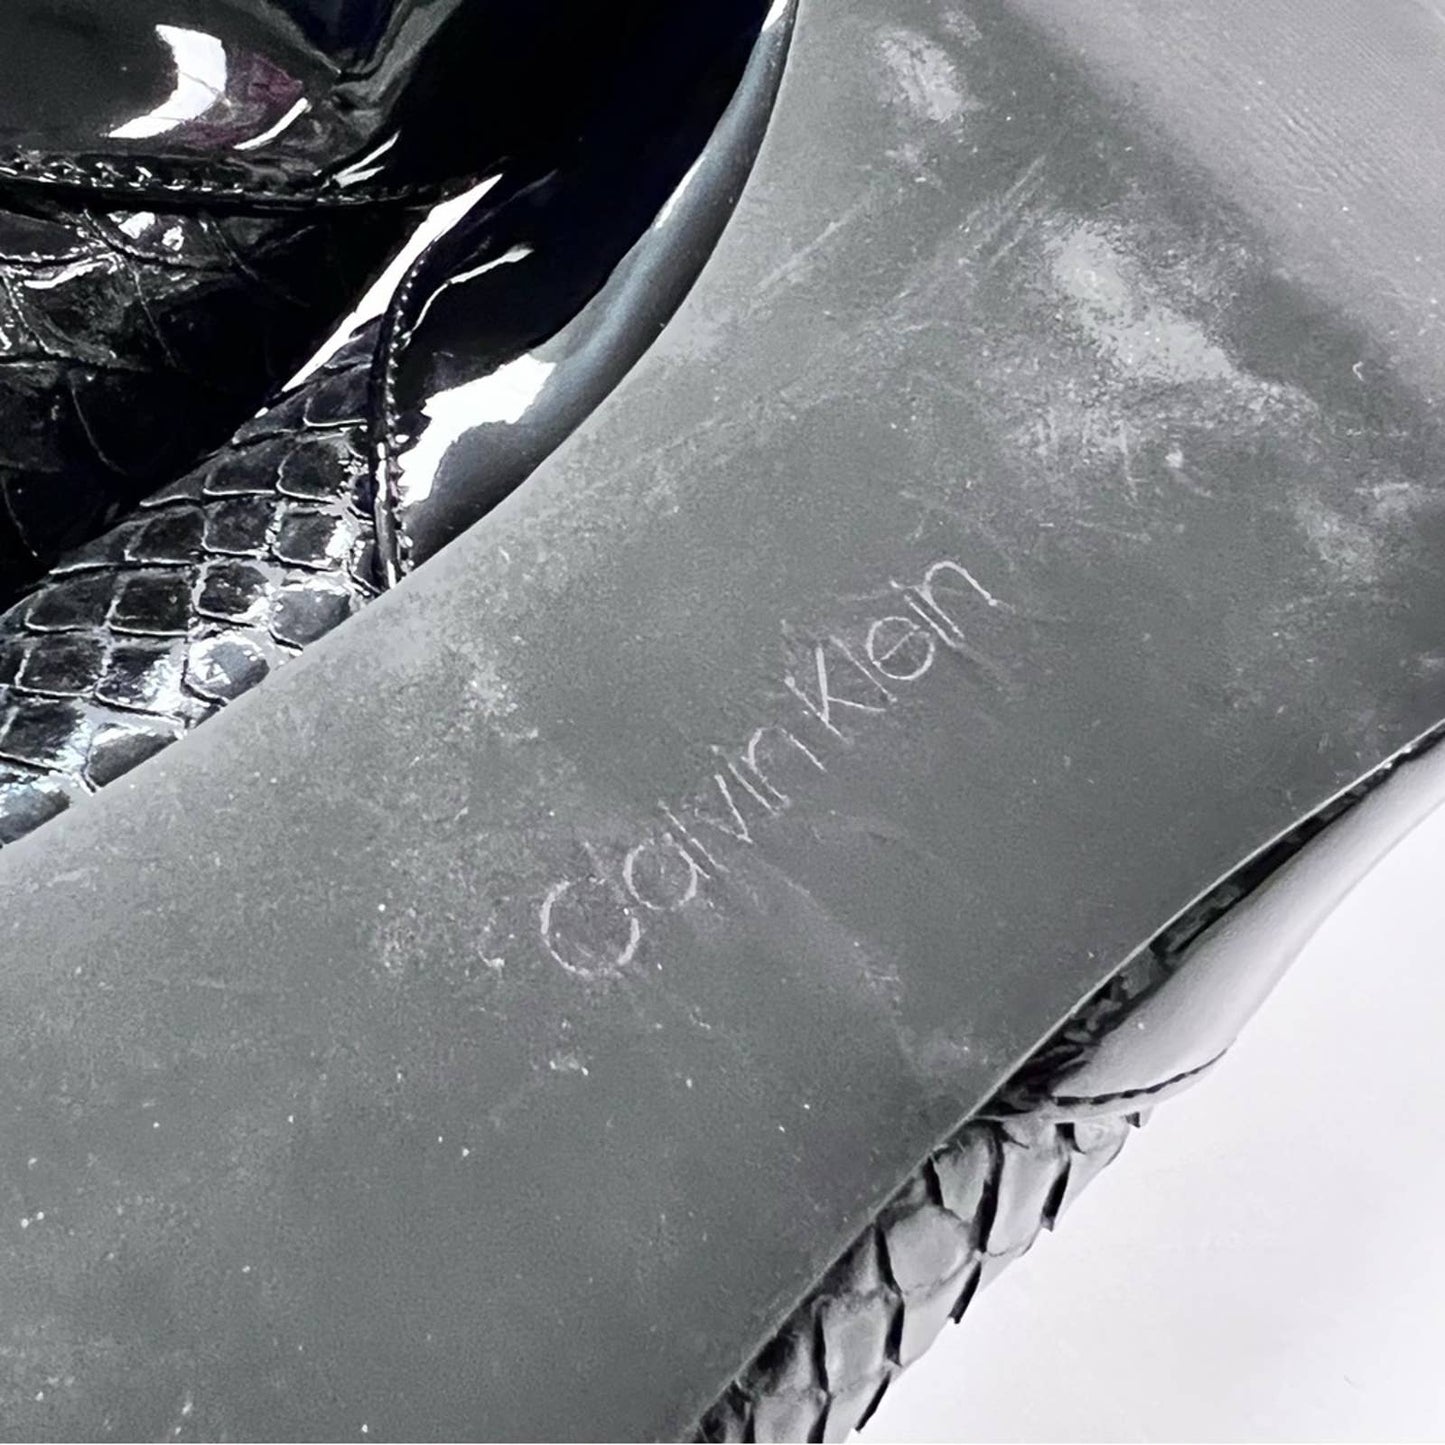 Calvin Klein Black Patent Leather 2” Kitten Heels 11